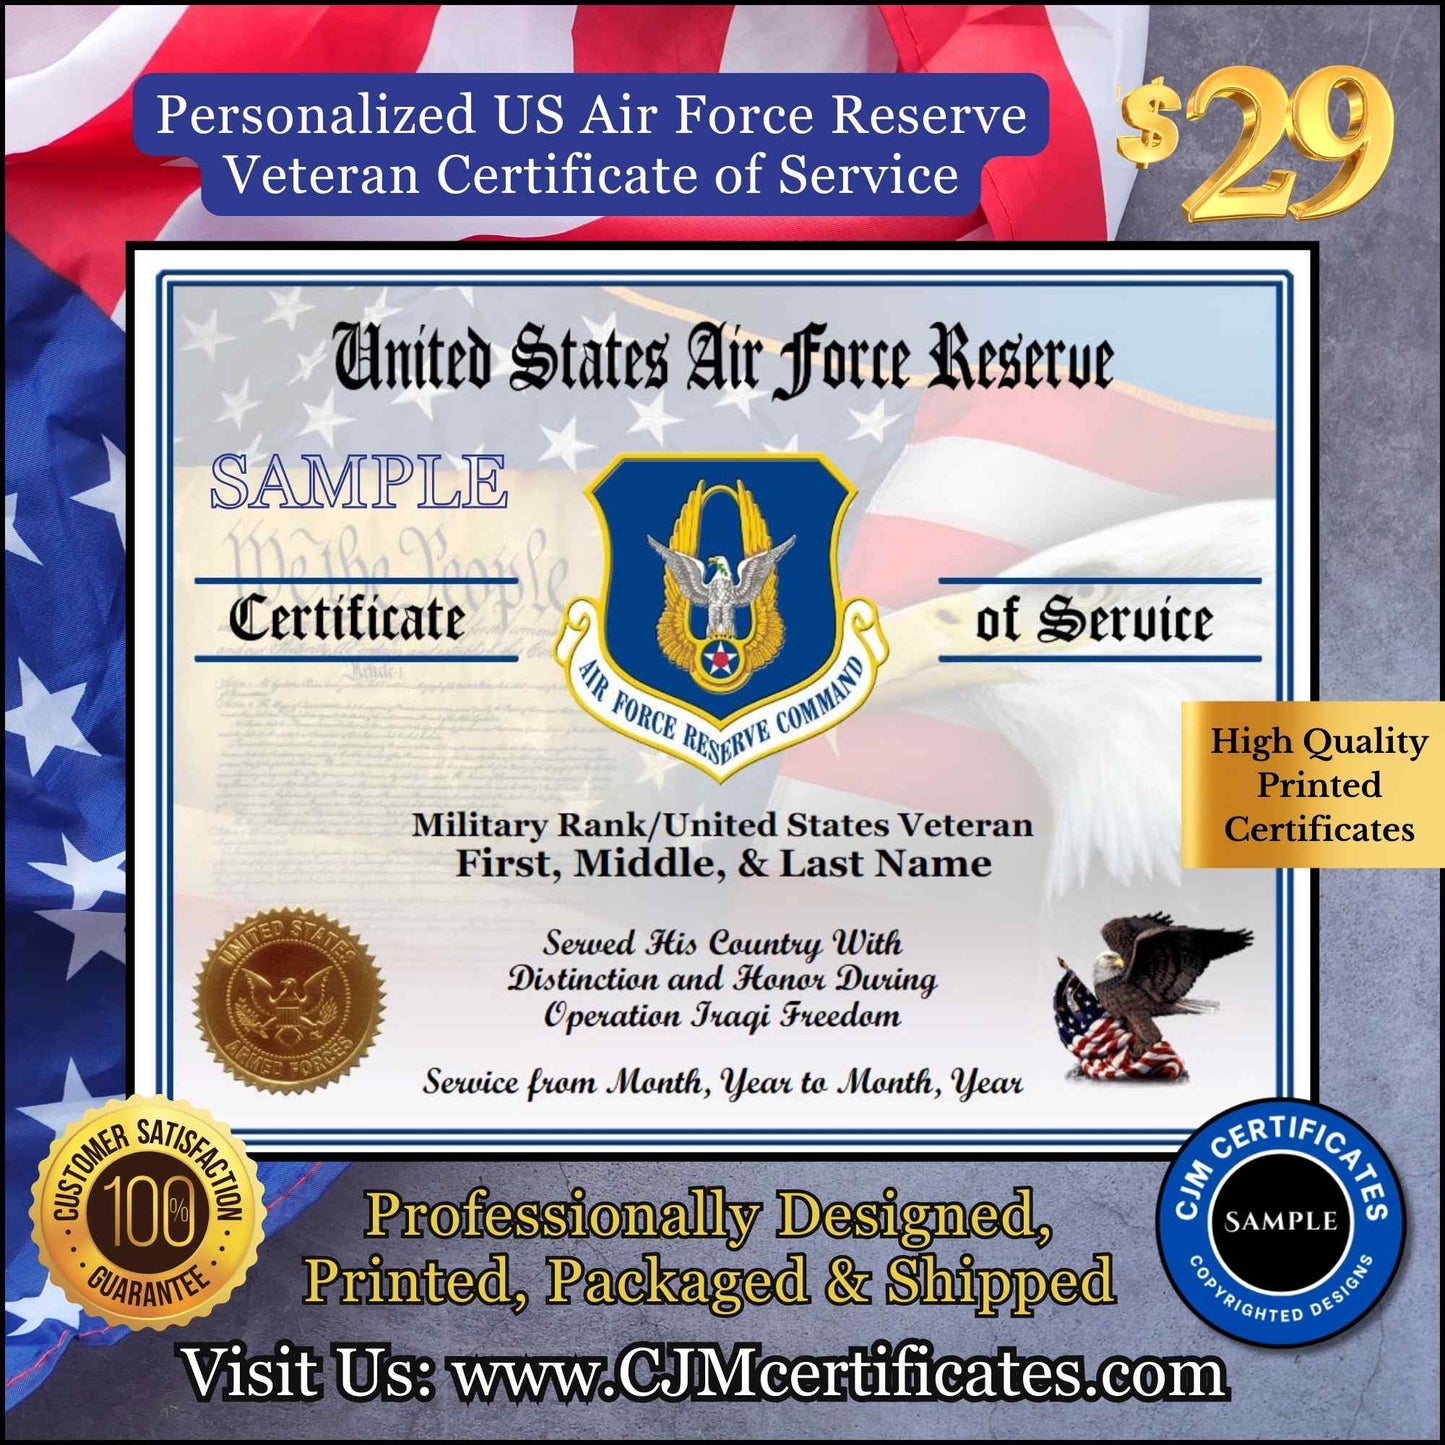 Veteran Certificates of Service